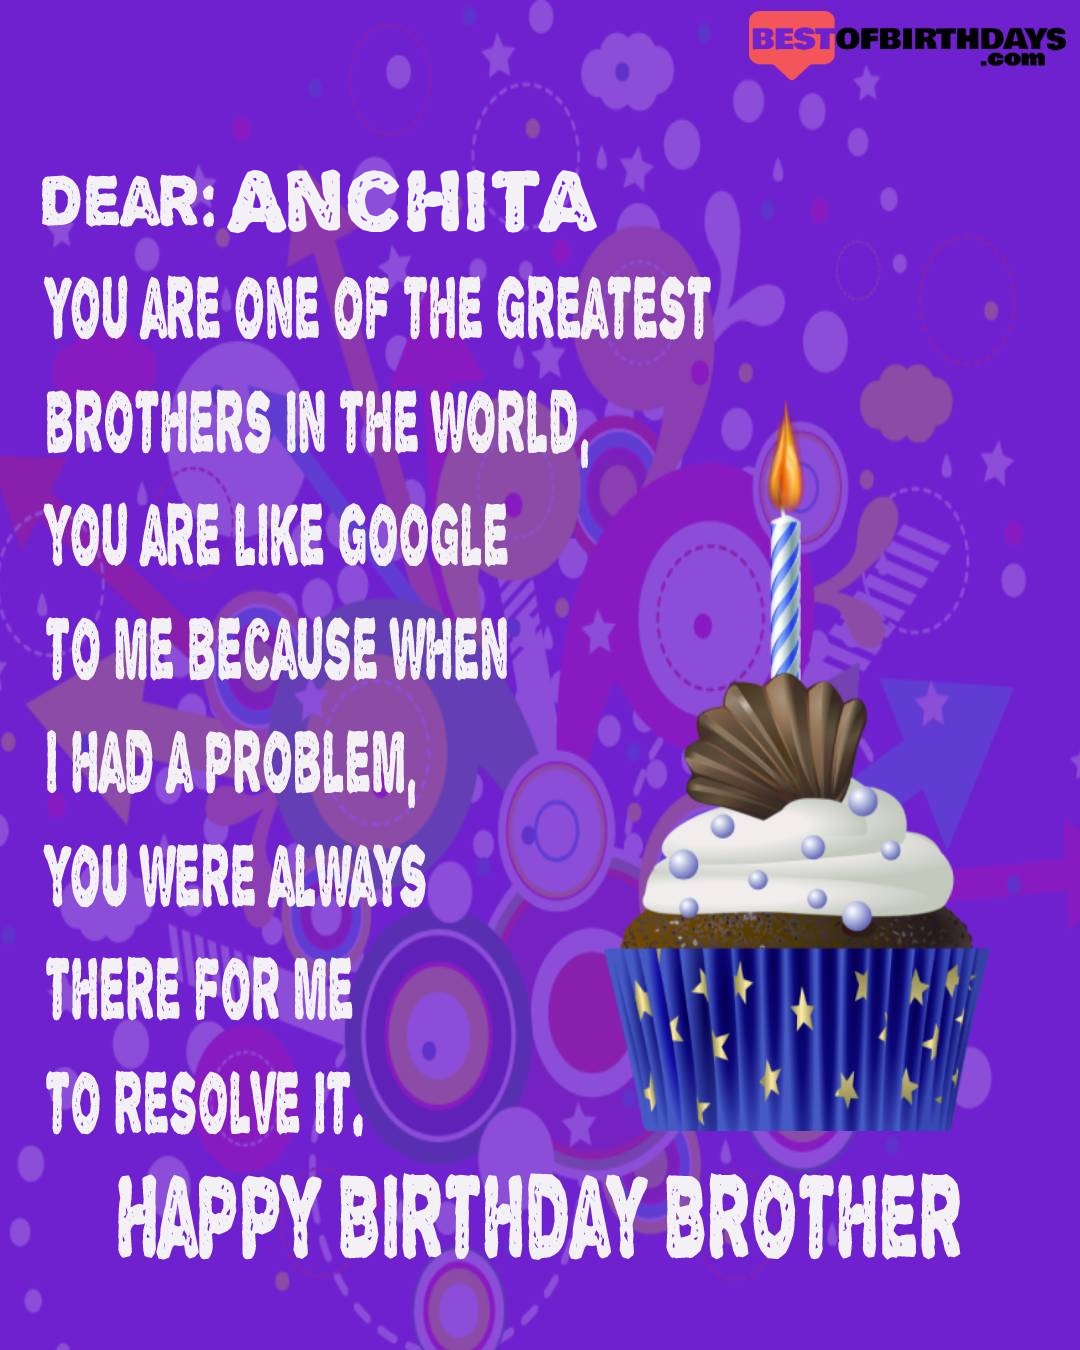 Happy birthday anchita bhai brother bro